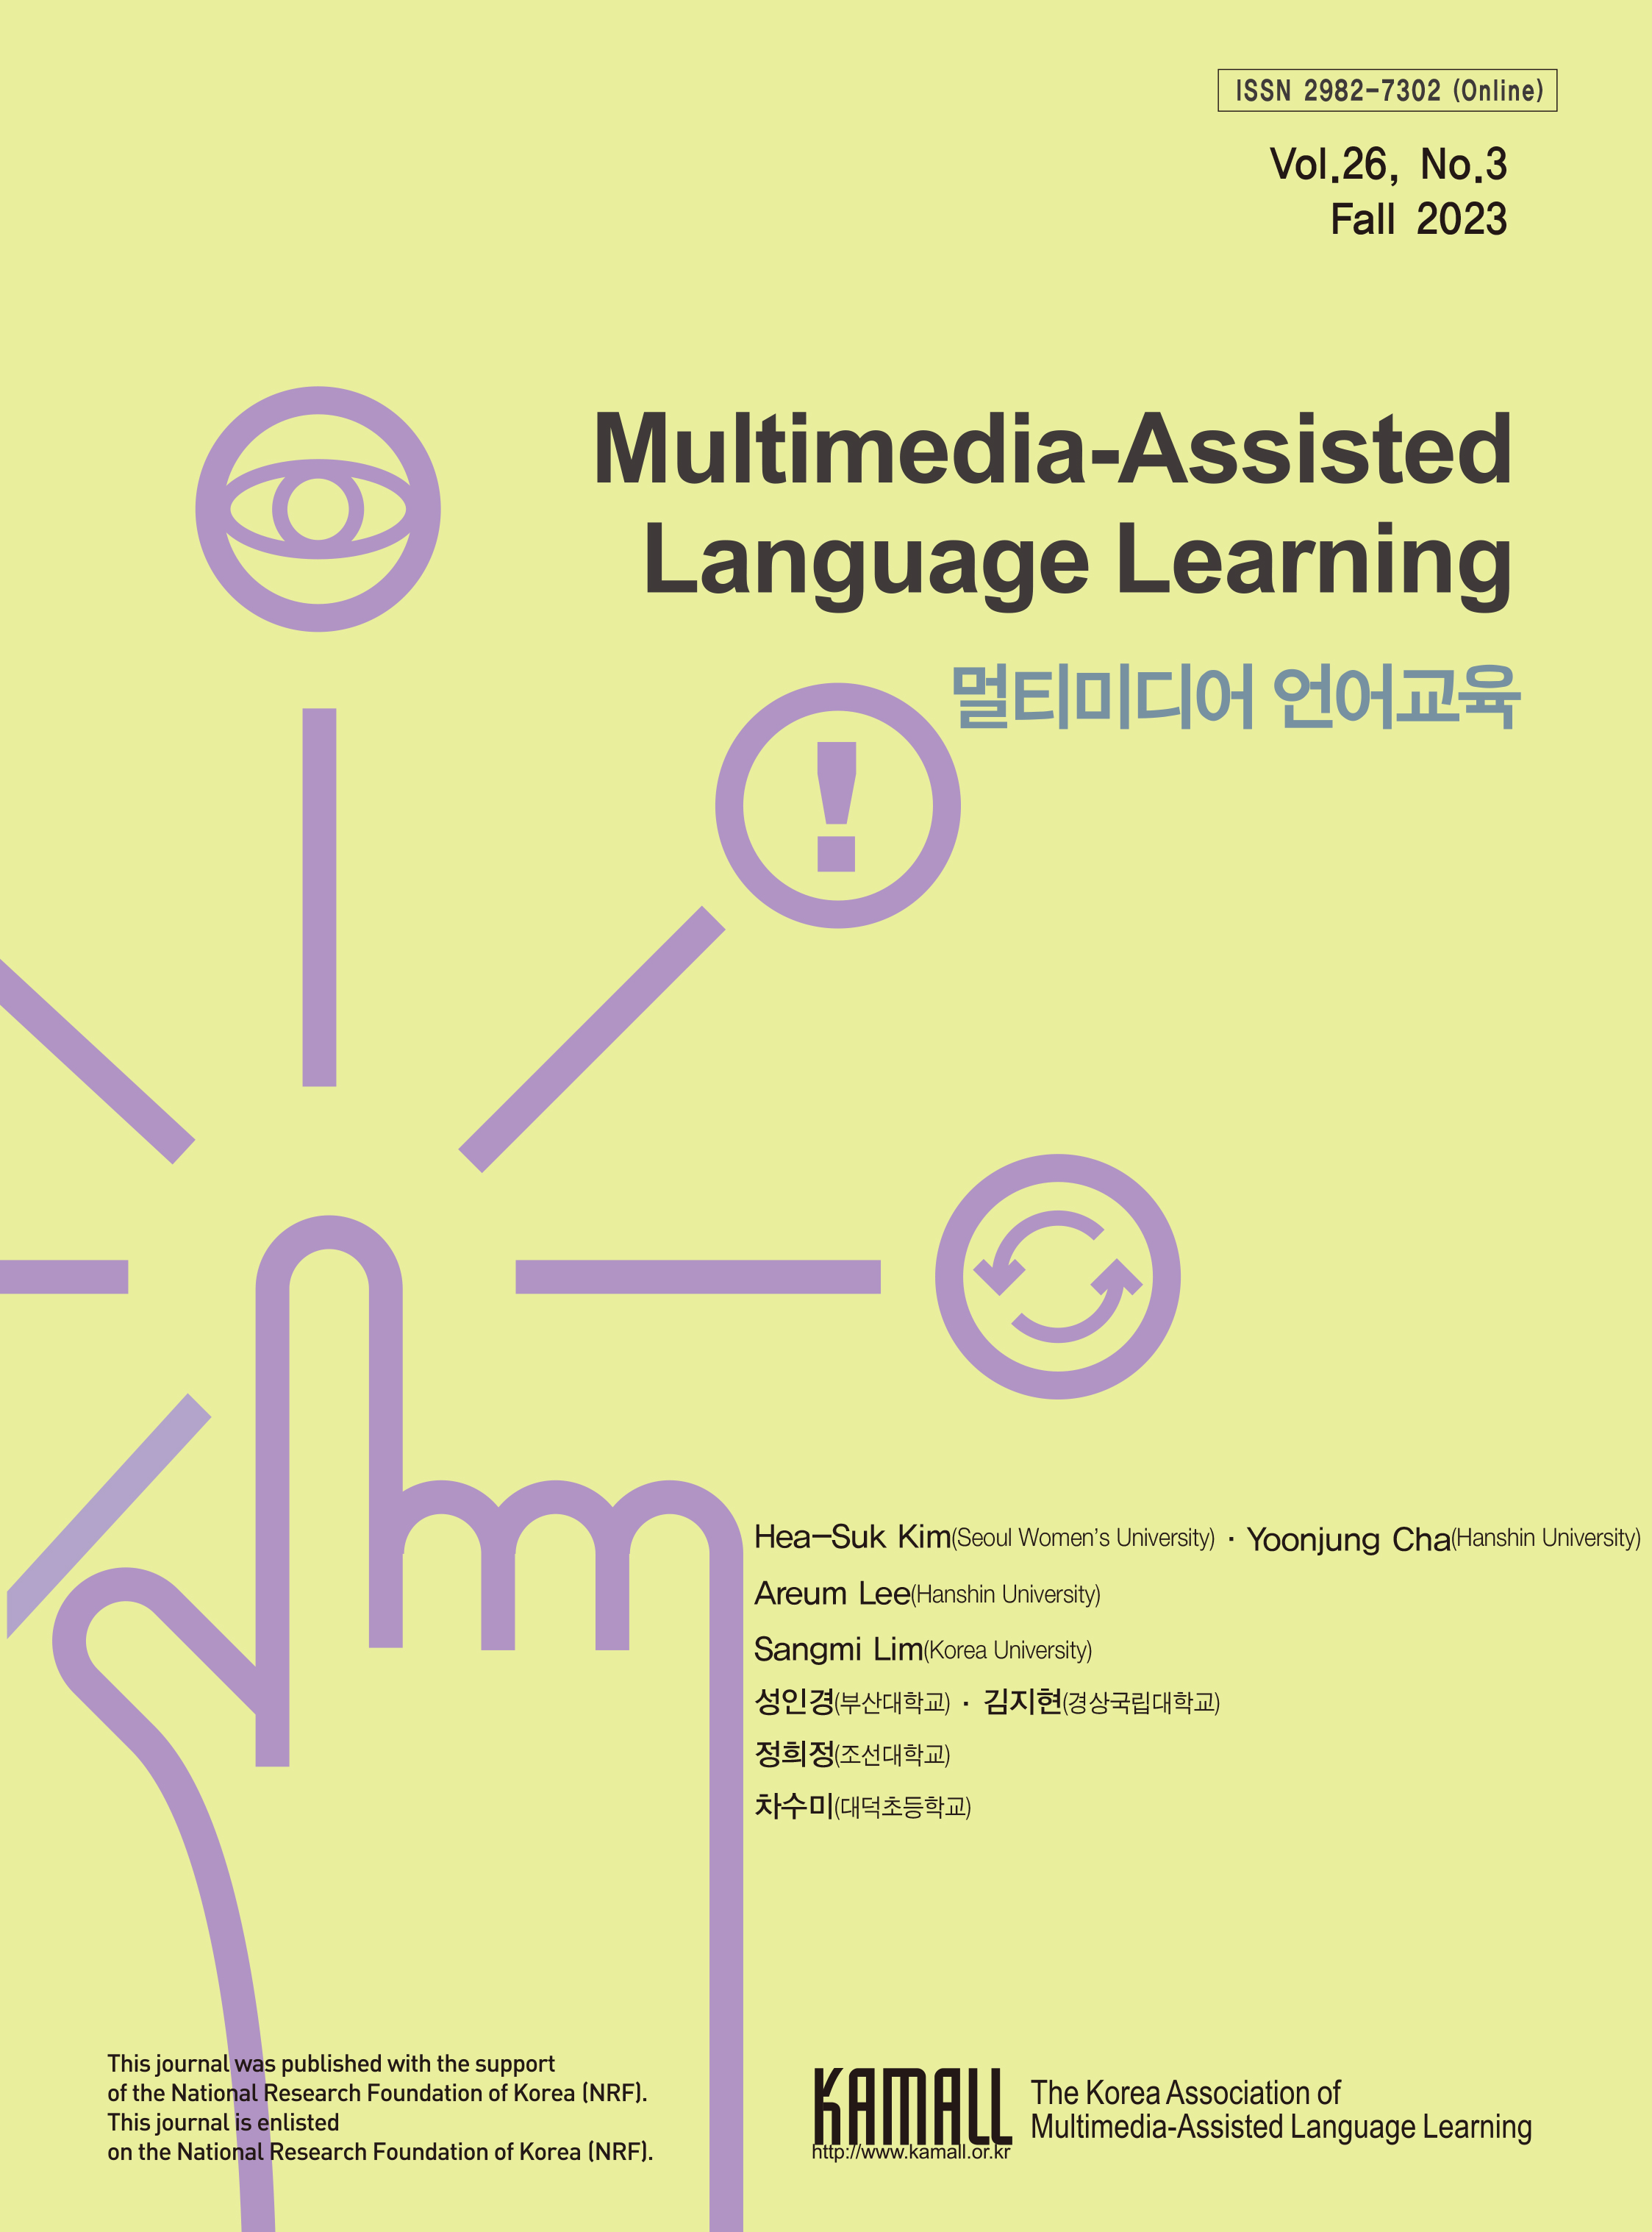 Korea Association of Multimedia-Assisted Language Learning